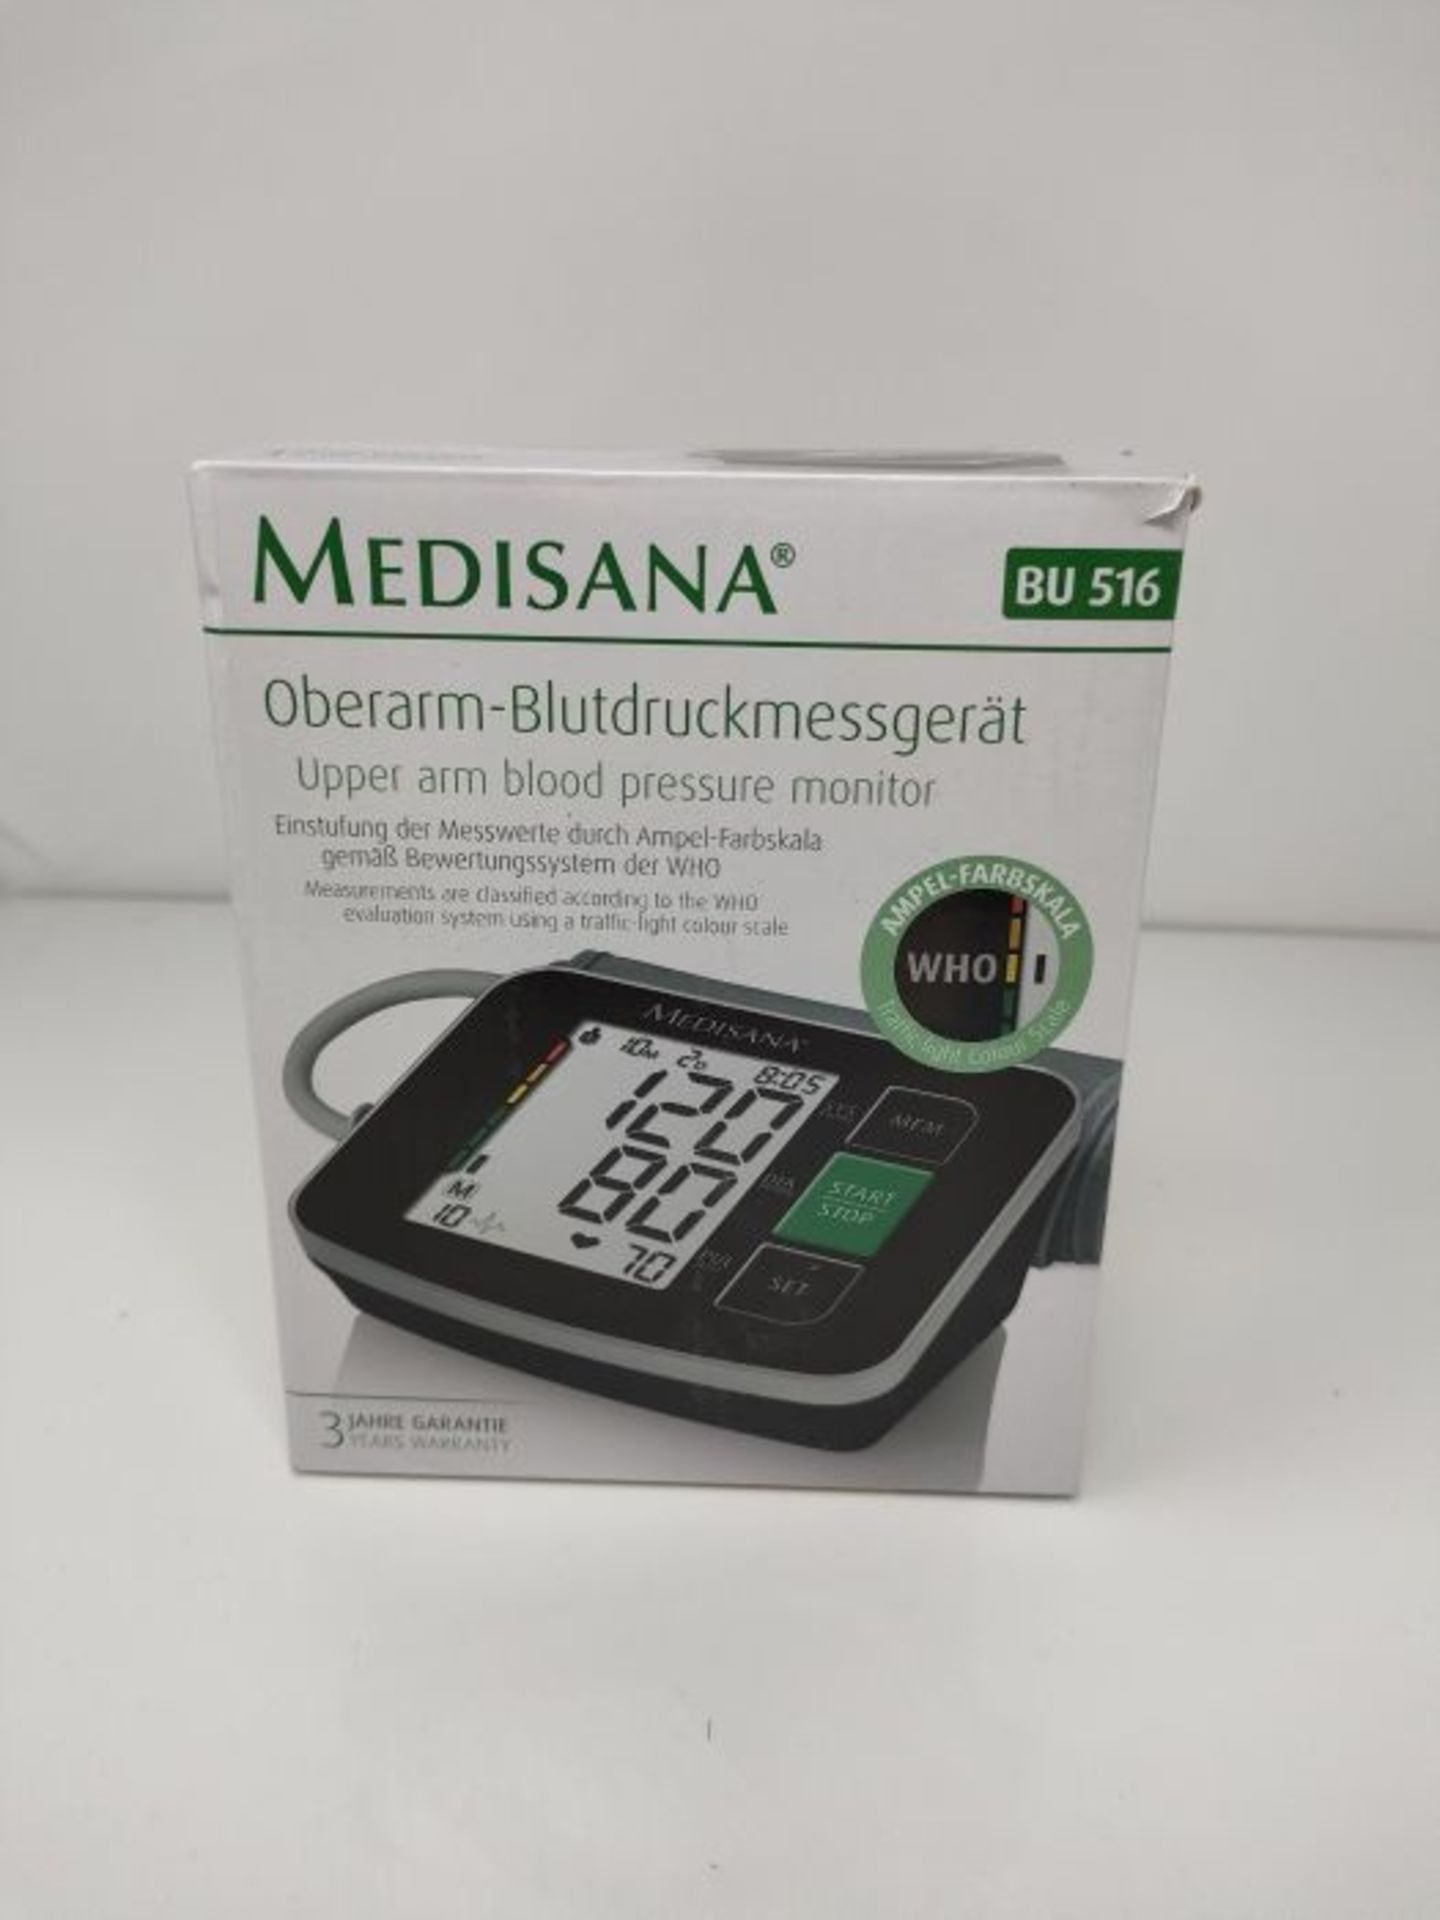 Medisana BU 516 Digital Upper Arm Blood Pressure Monitor in Black - Home Use Heartbeat - Image 2 of 3